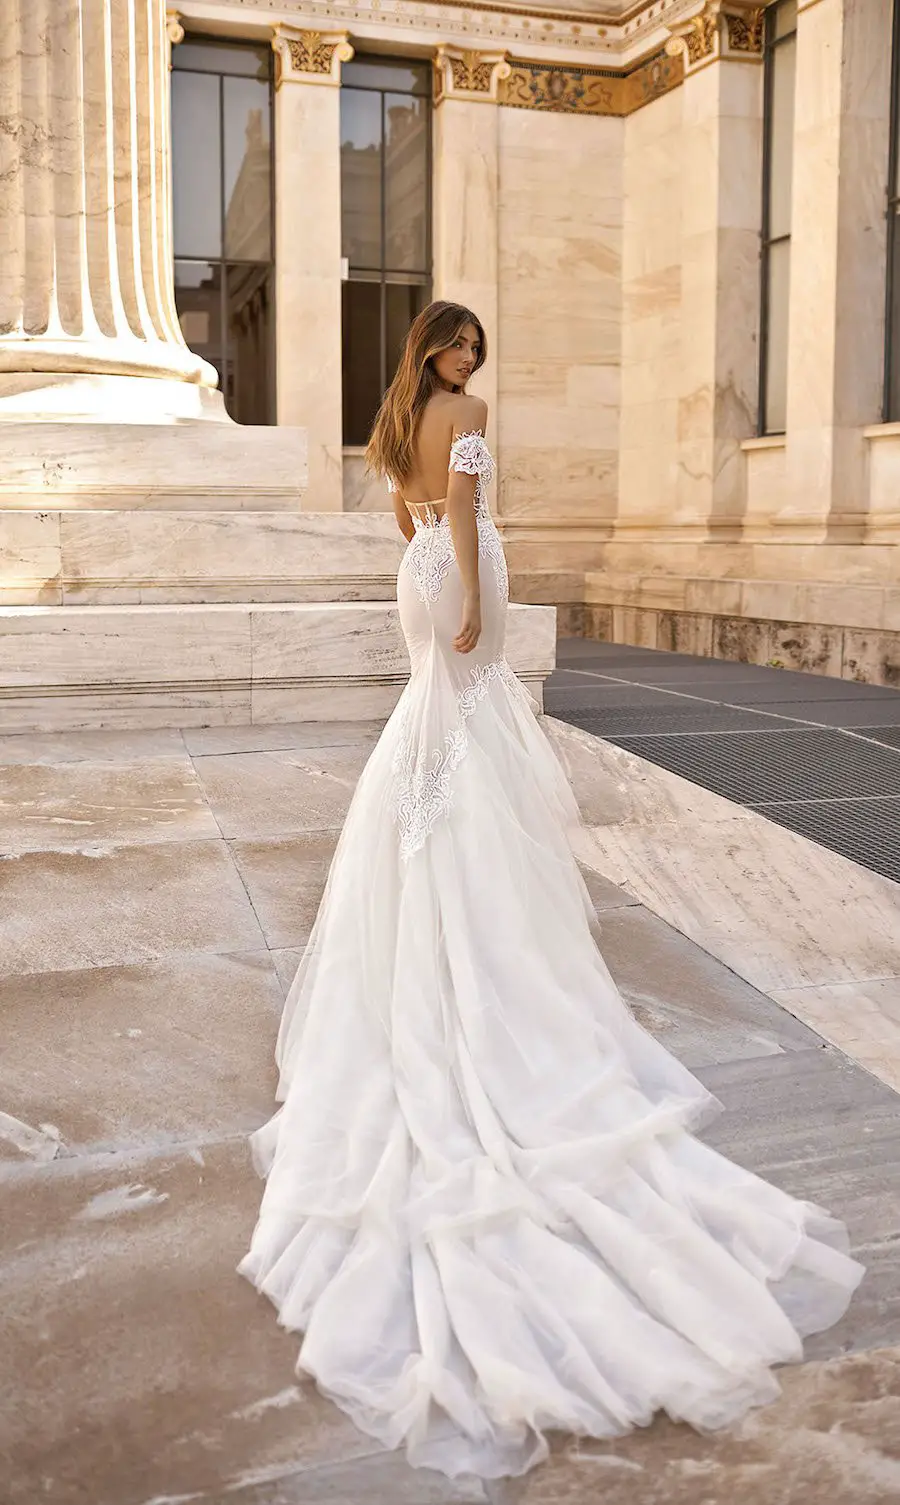 Glamorous 2019 Berta Wedding Dresses: Athens Collection ...